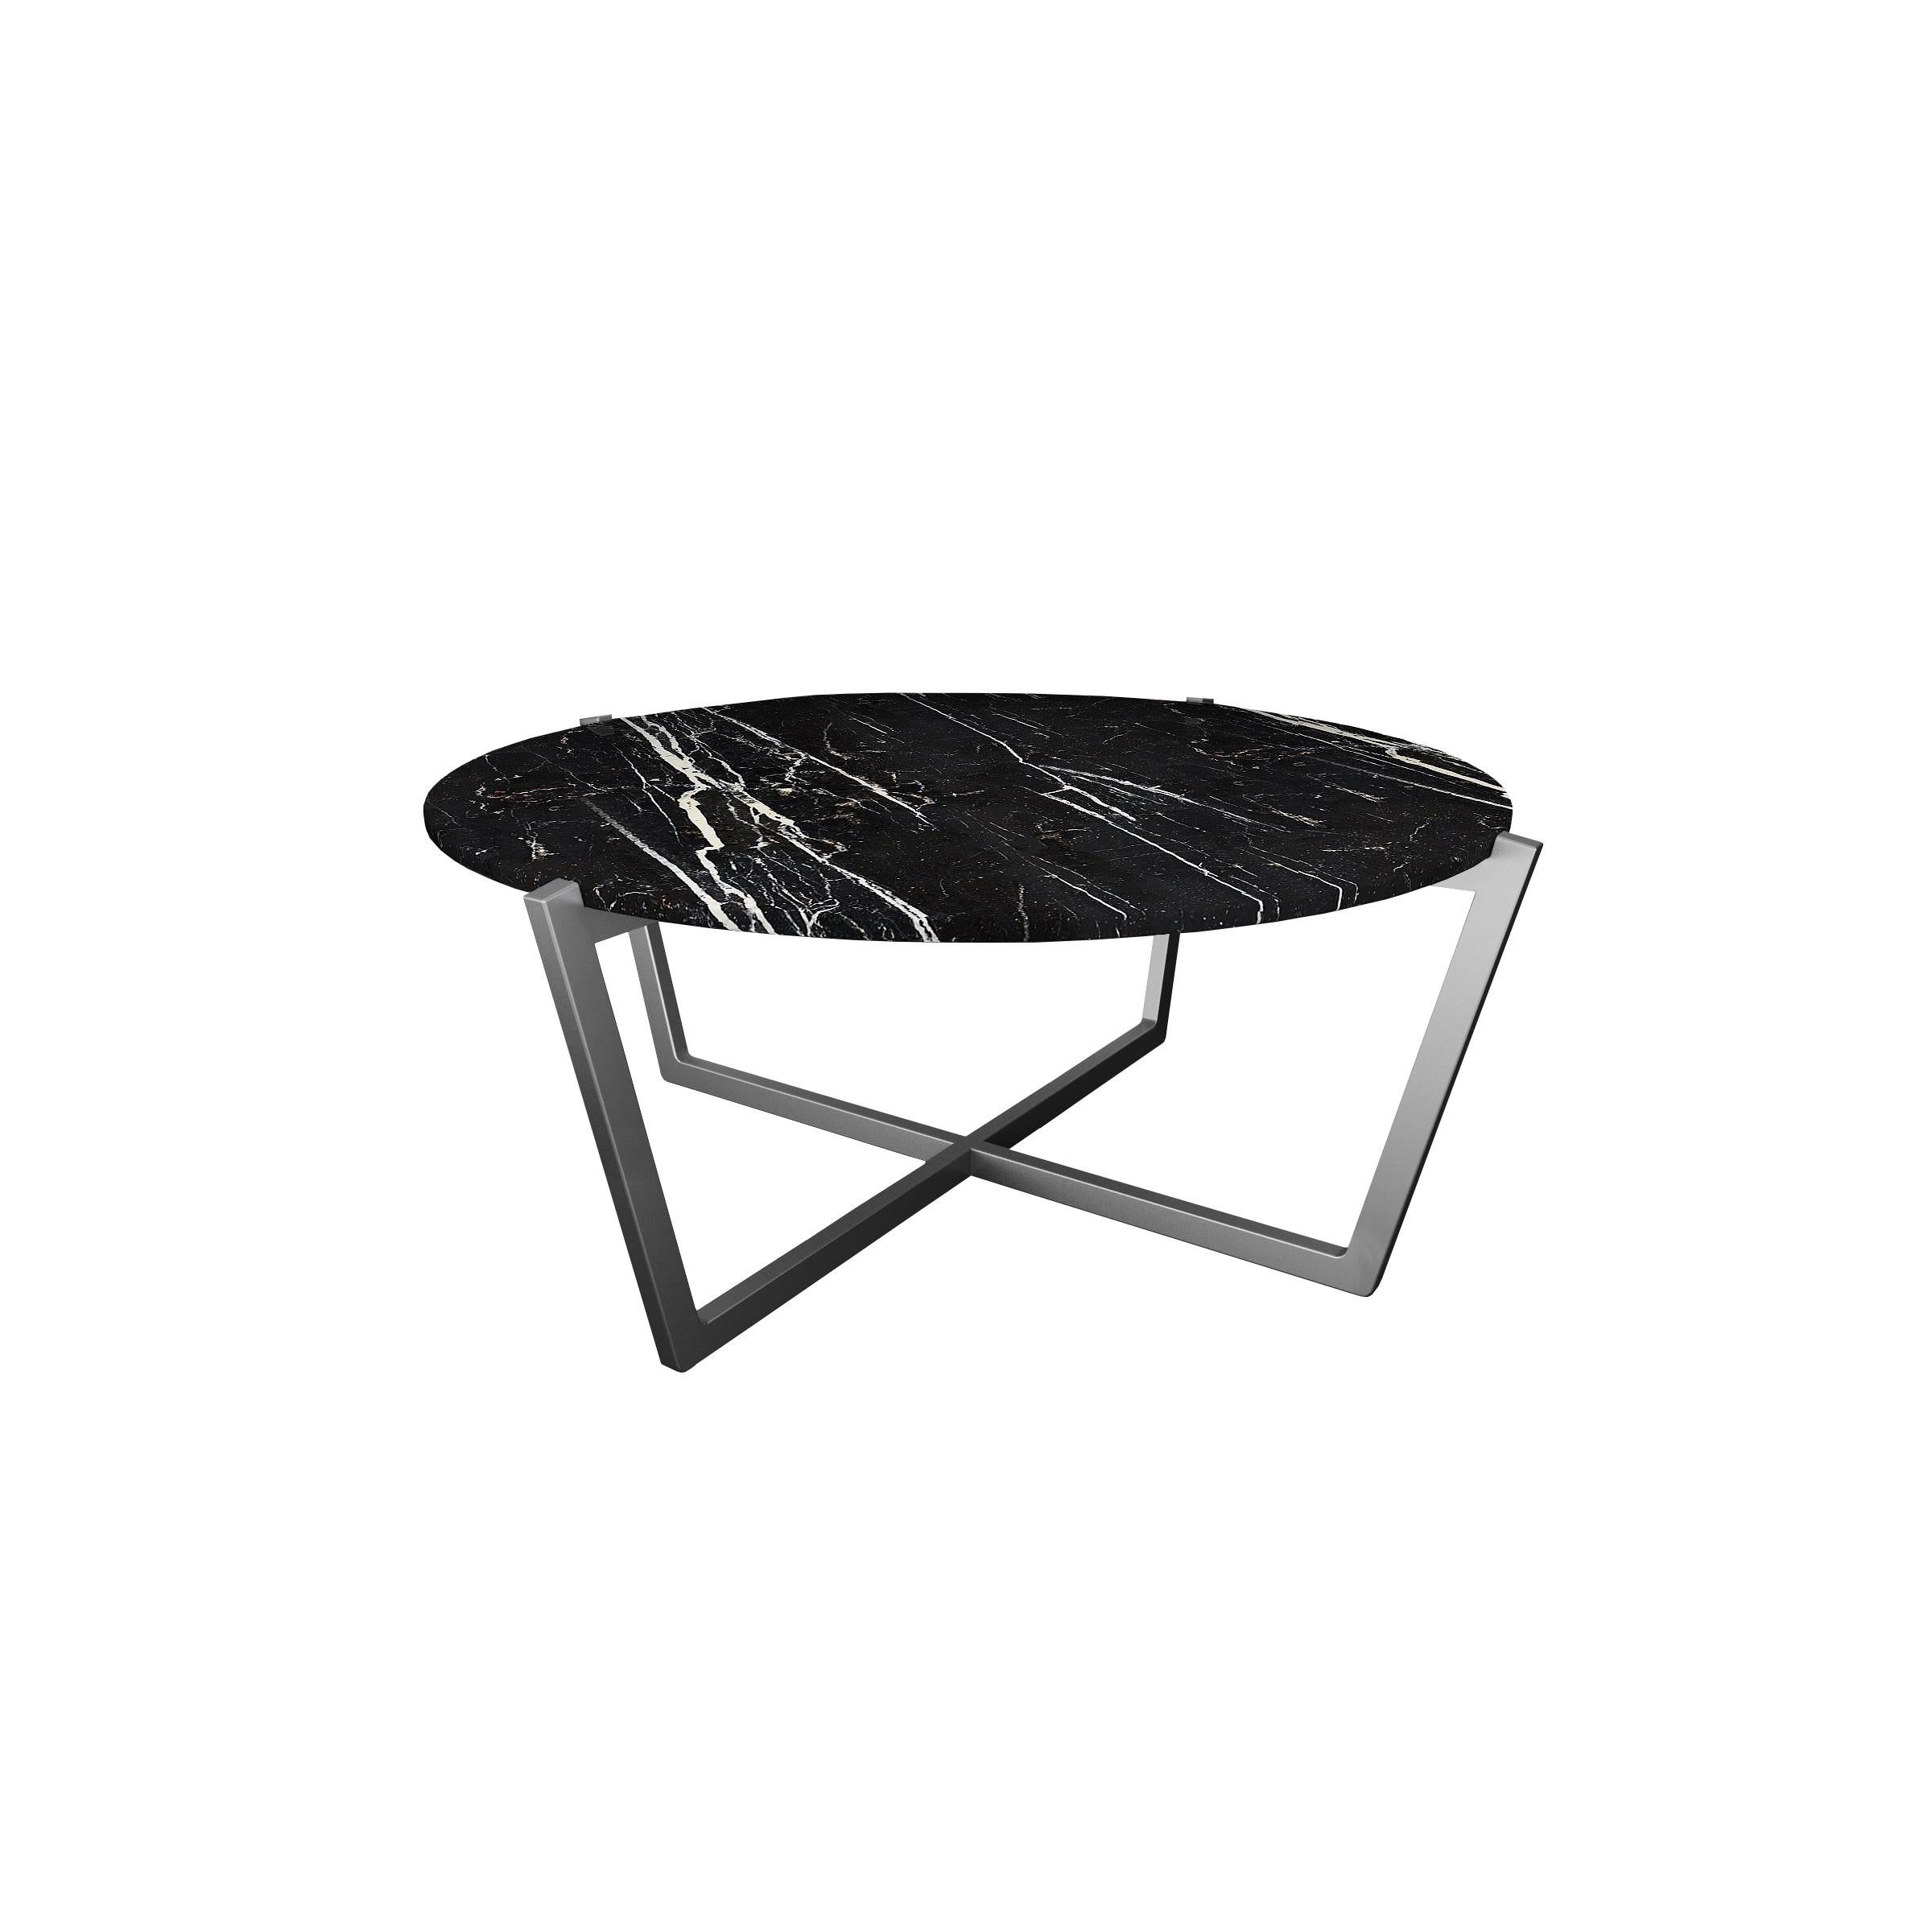 Chinese NORDST EMMA Coffee Table, Italian Grey Rain Marble, Danish Modern Design, New For Sale